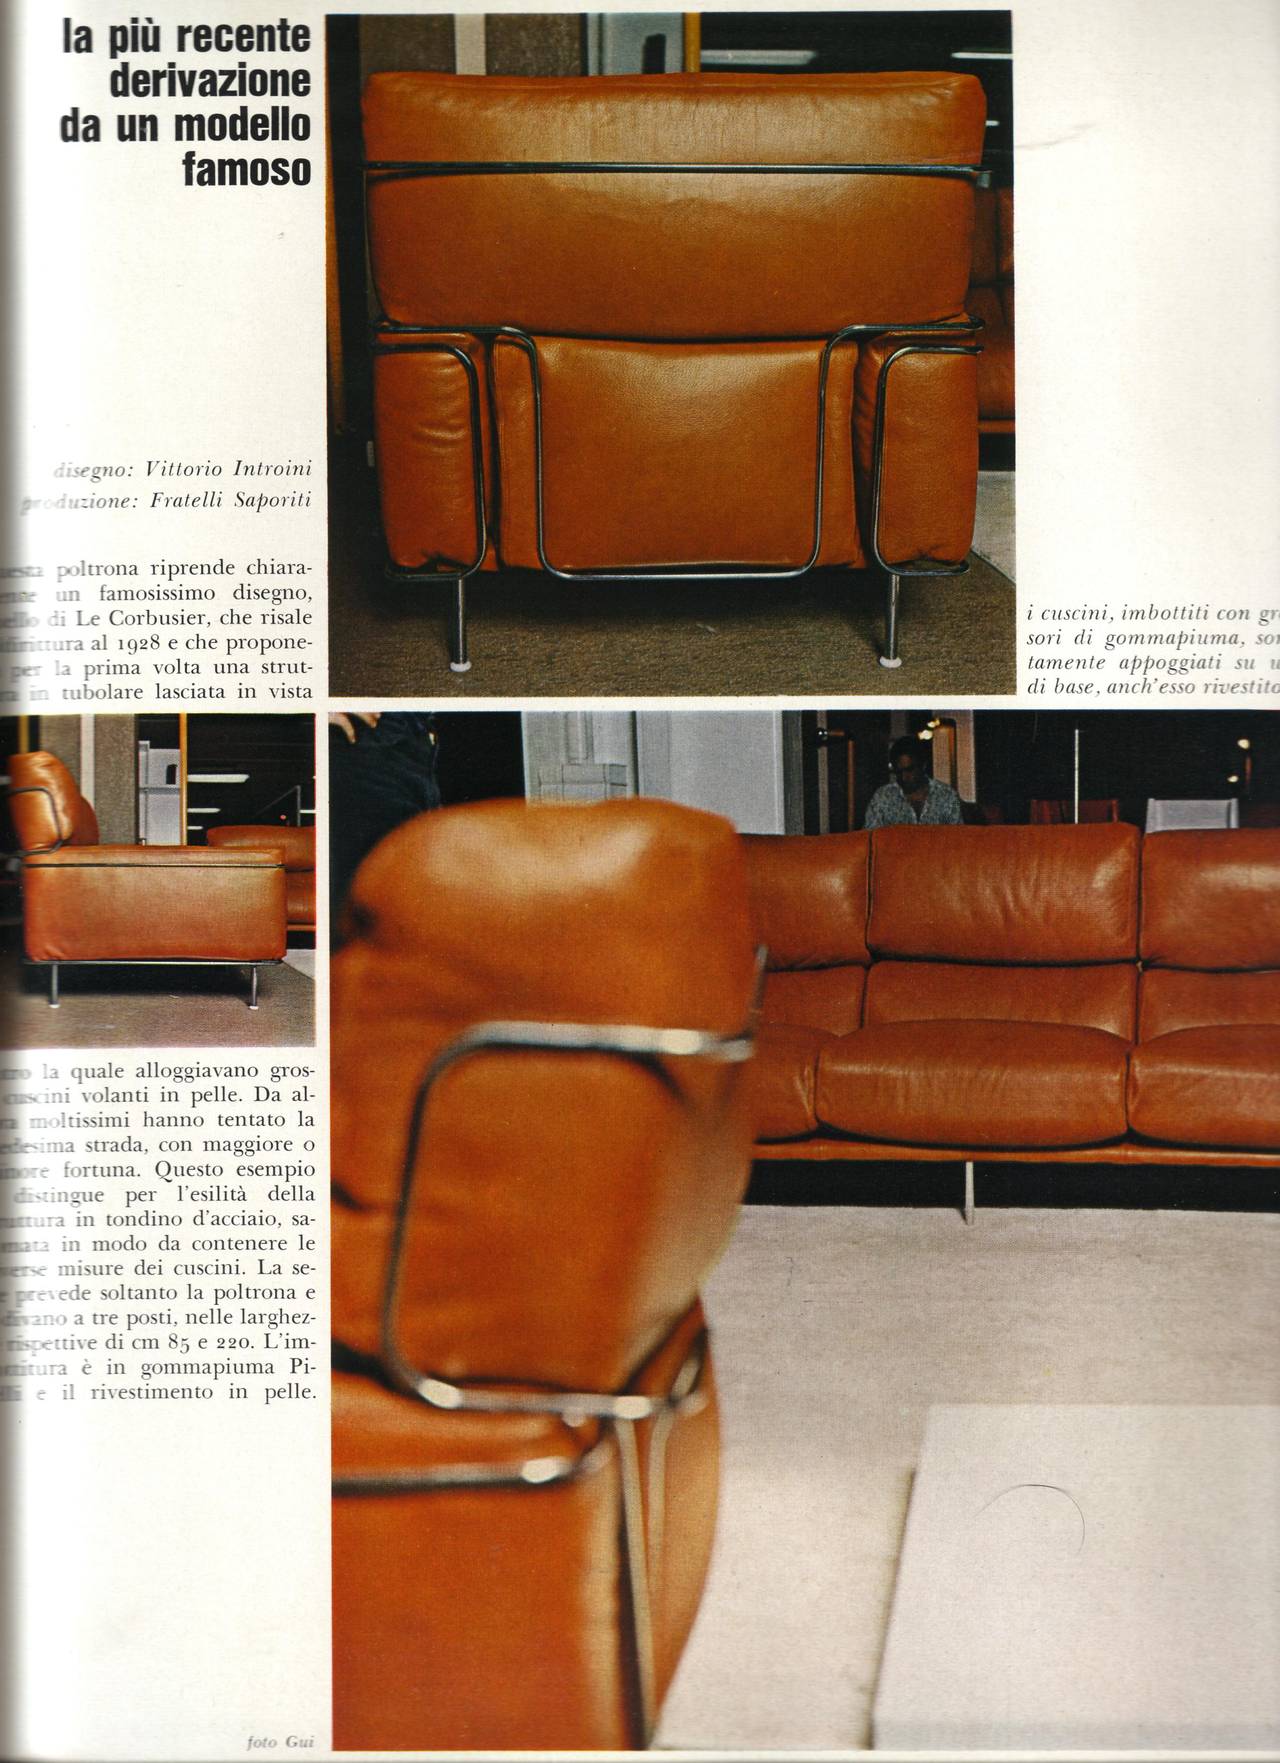 Rare Three-Seat Leather Sofa by Vittorio Introini for Saporiti, 1968, Published 3